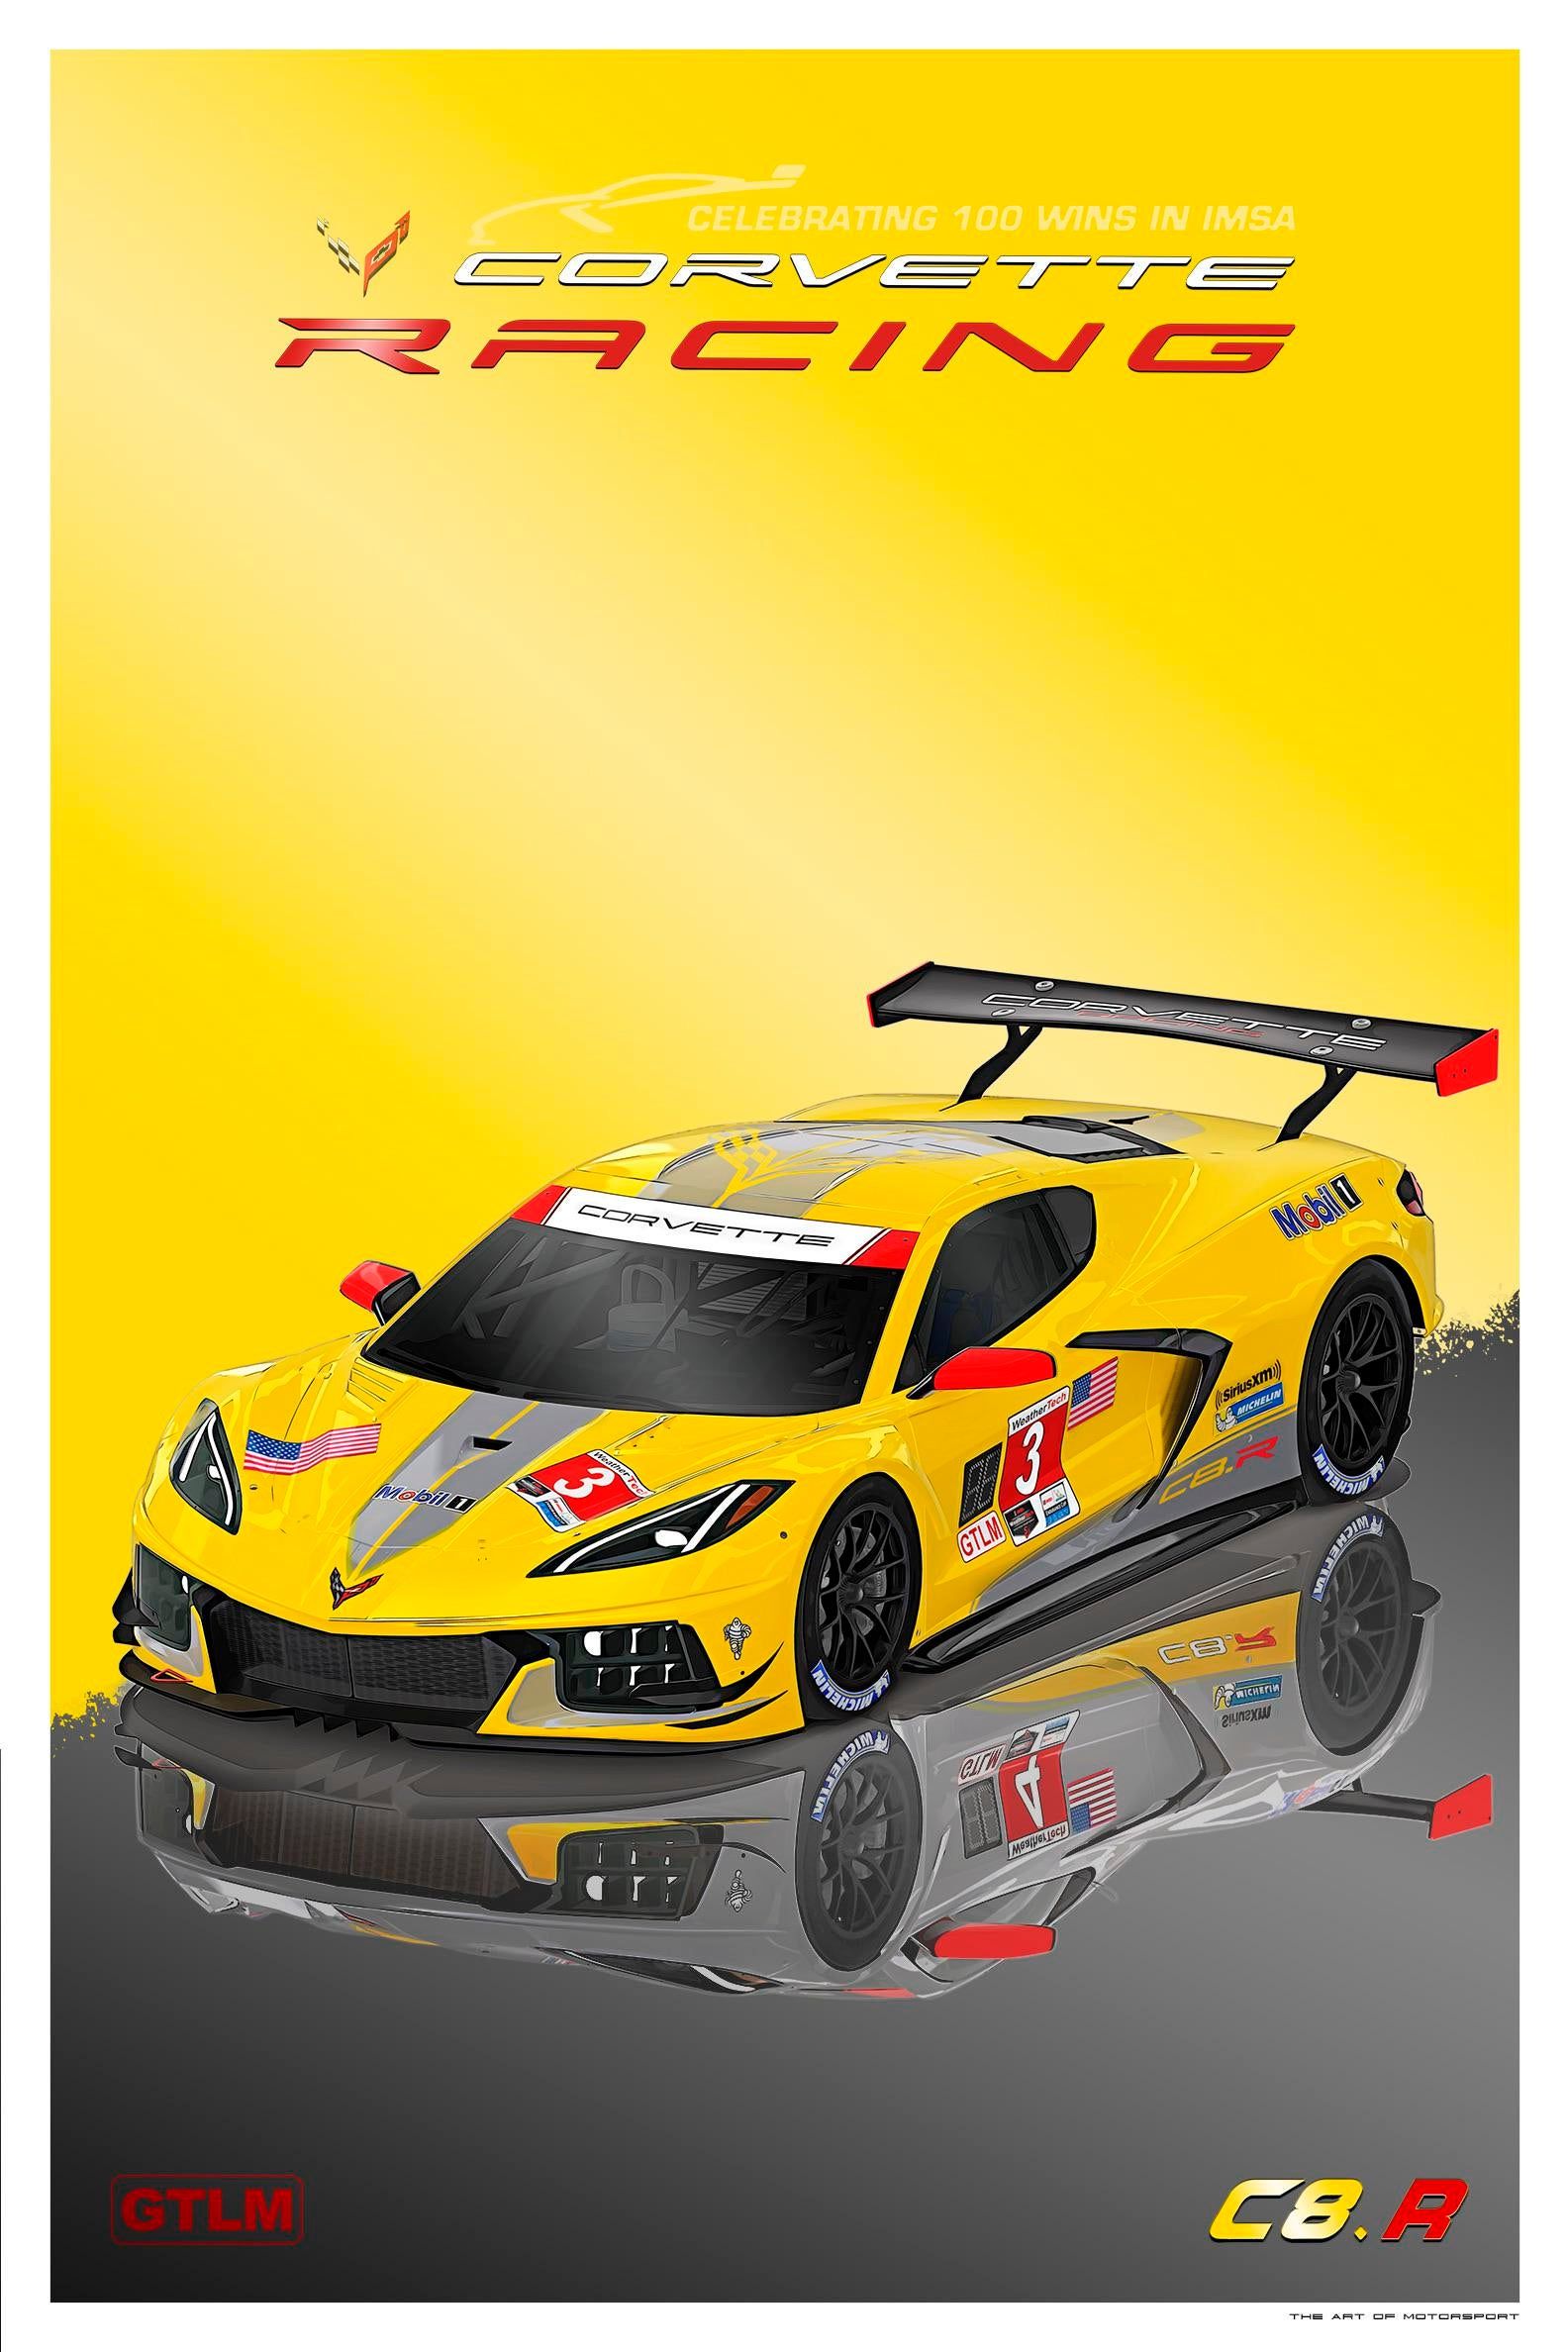 Celebrating 100 Race Wins in IMSA latest Corvette C8.R artwork ( Wallpaper in Comments per usual!)